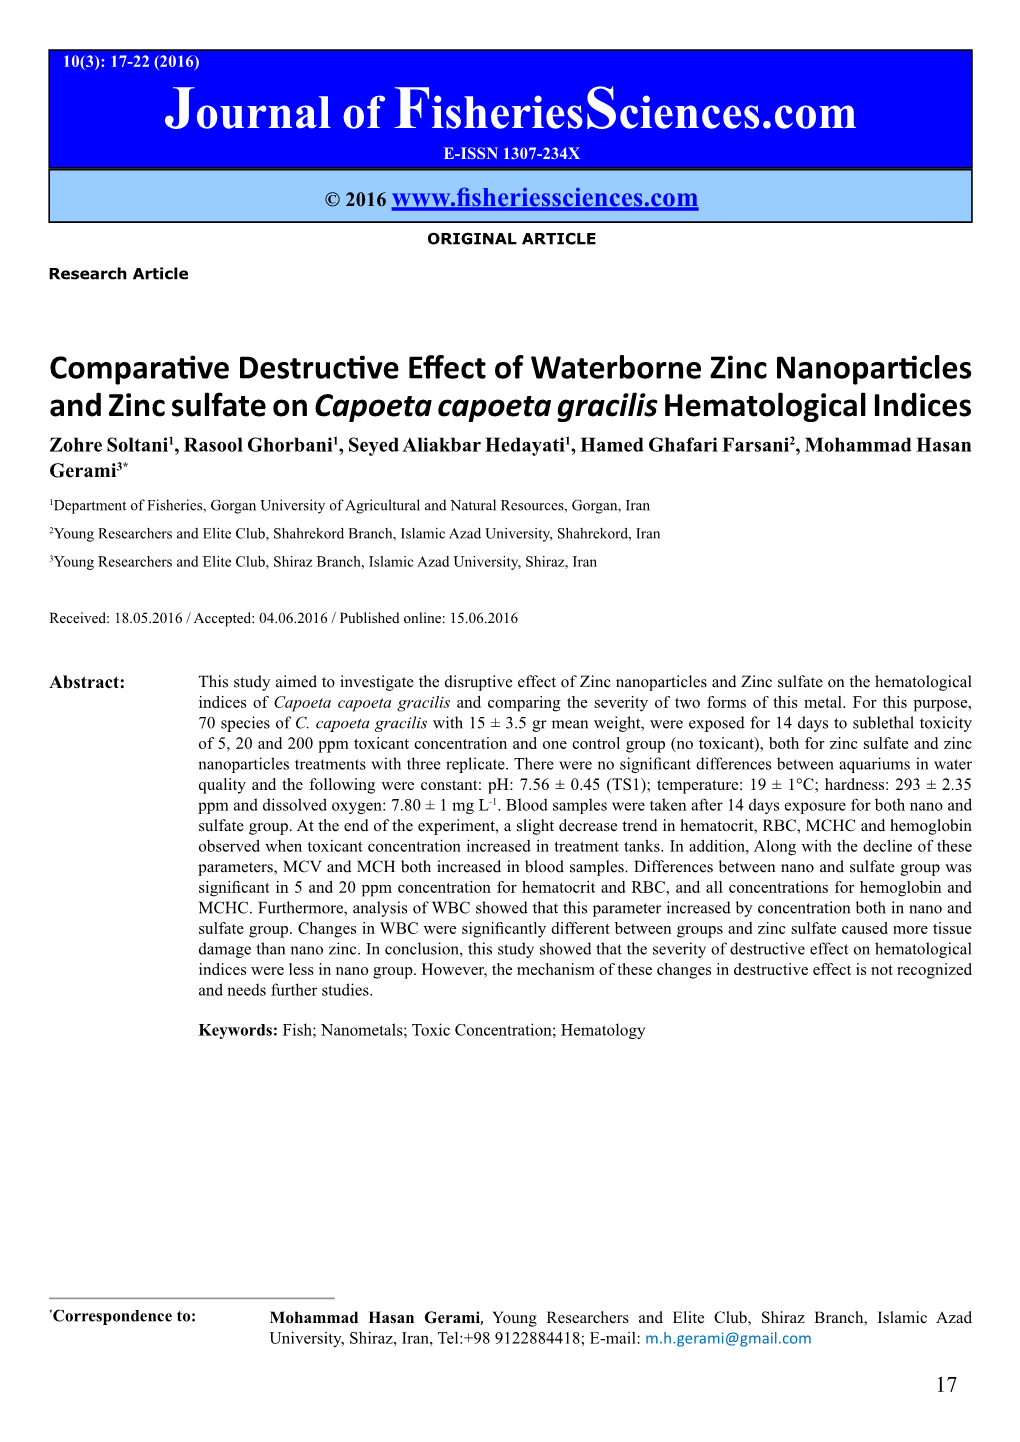 Comparative Destructive Effect of Waterborne Zinc Nanoparticles And